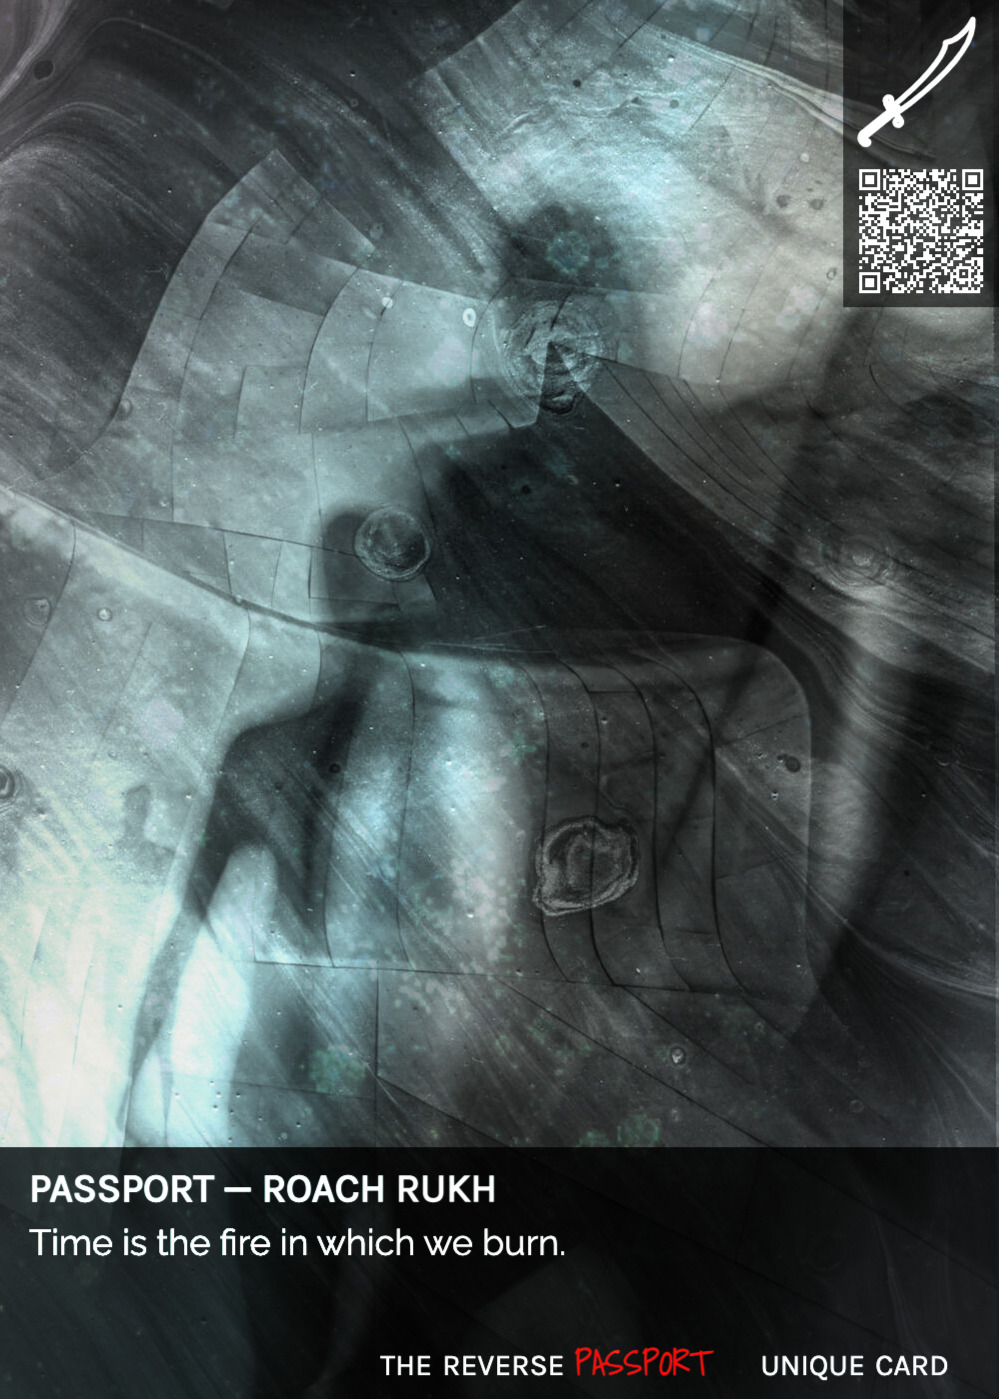 Passport — Roach Rukh